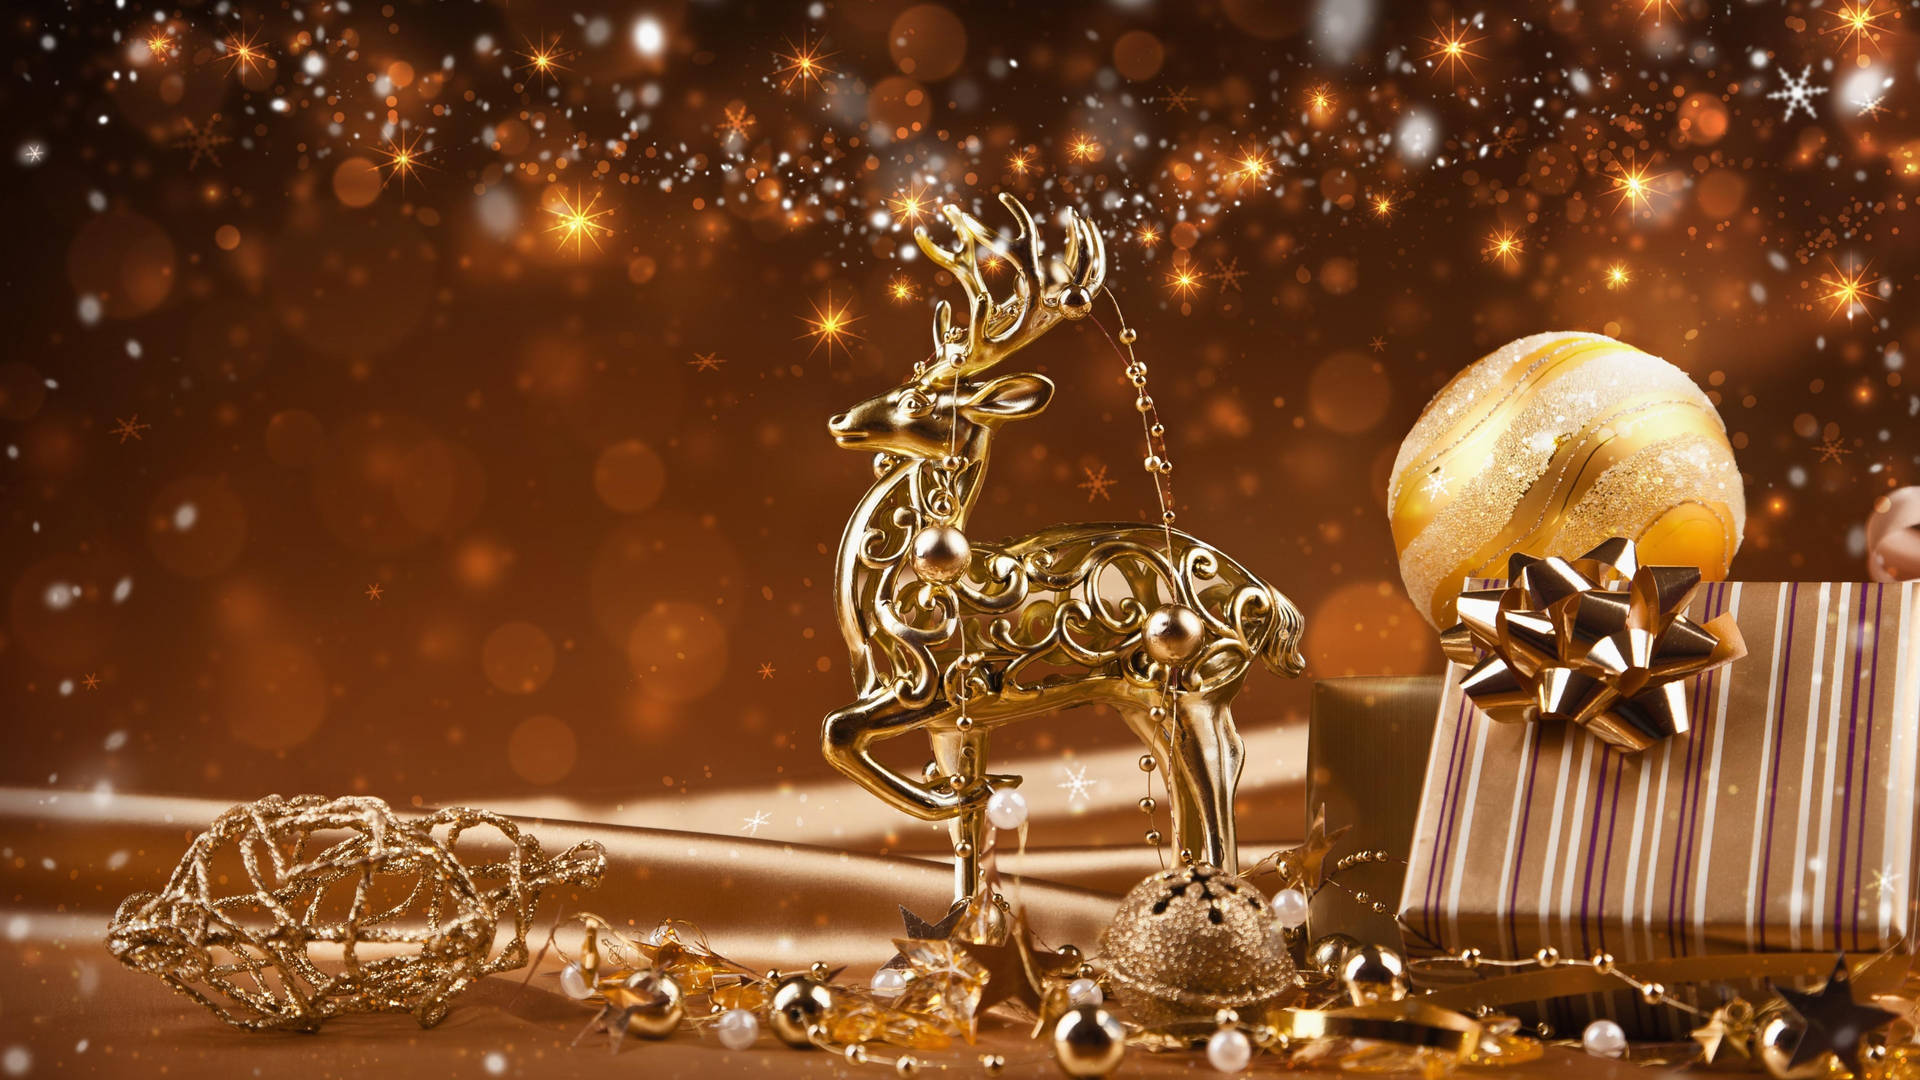 Golden Reindeer Christmas Aesthetic Background